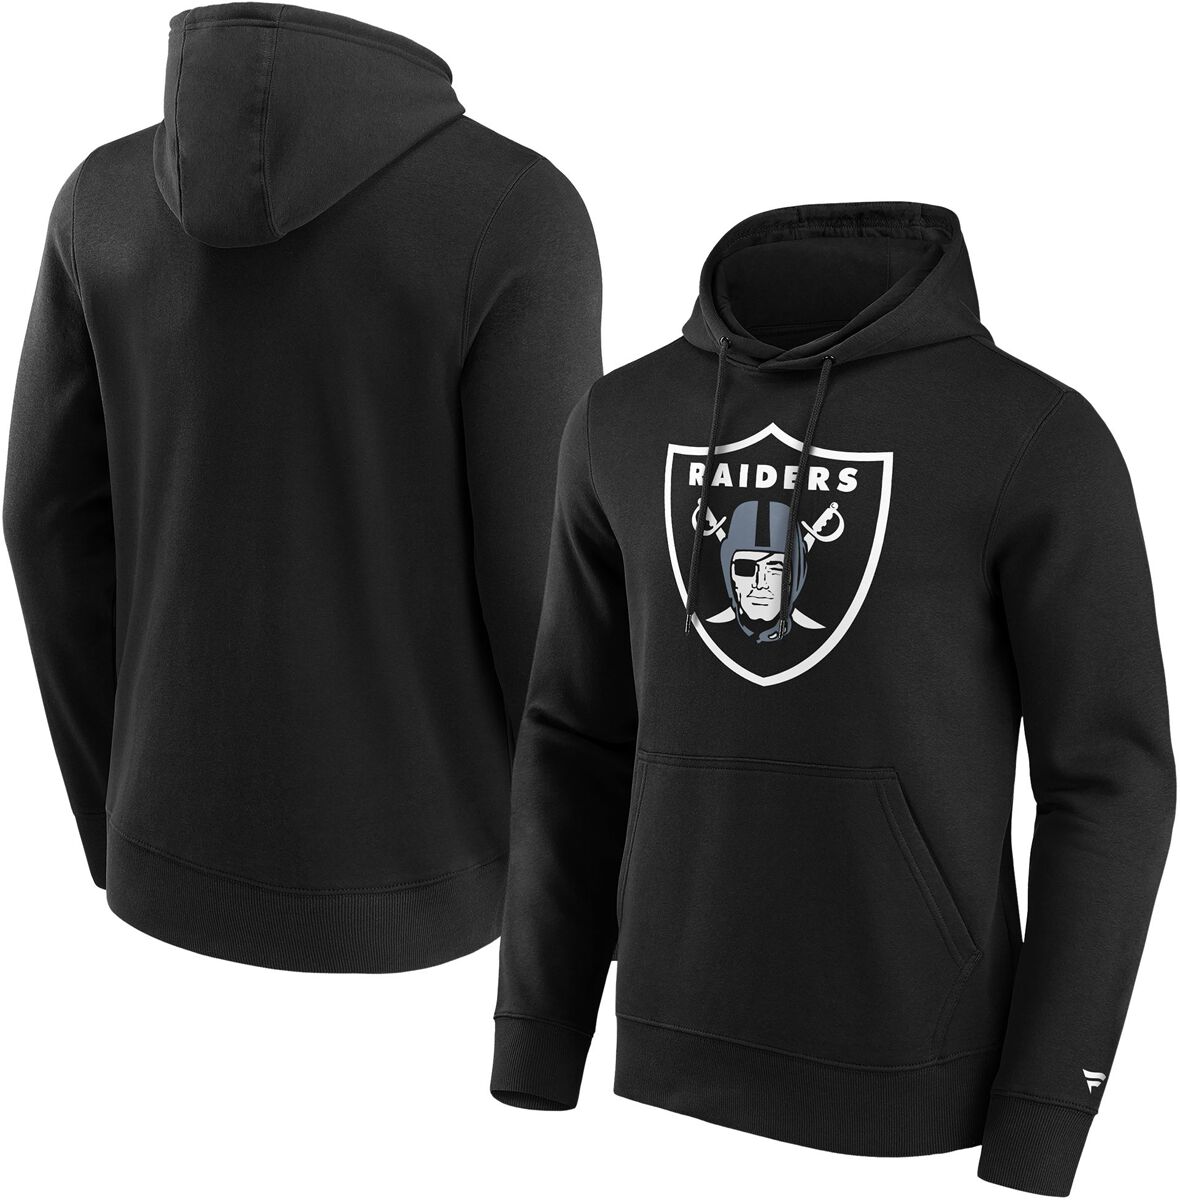 Fanatics Las Vegas Raiders Logo Kapuzenpullover schwarz in L